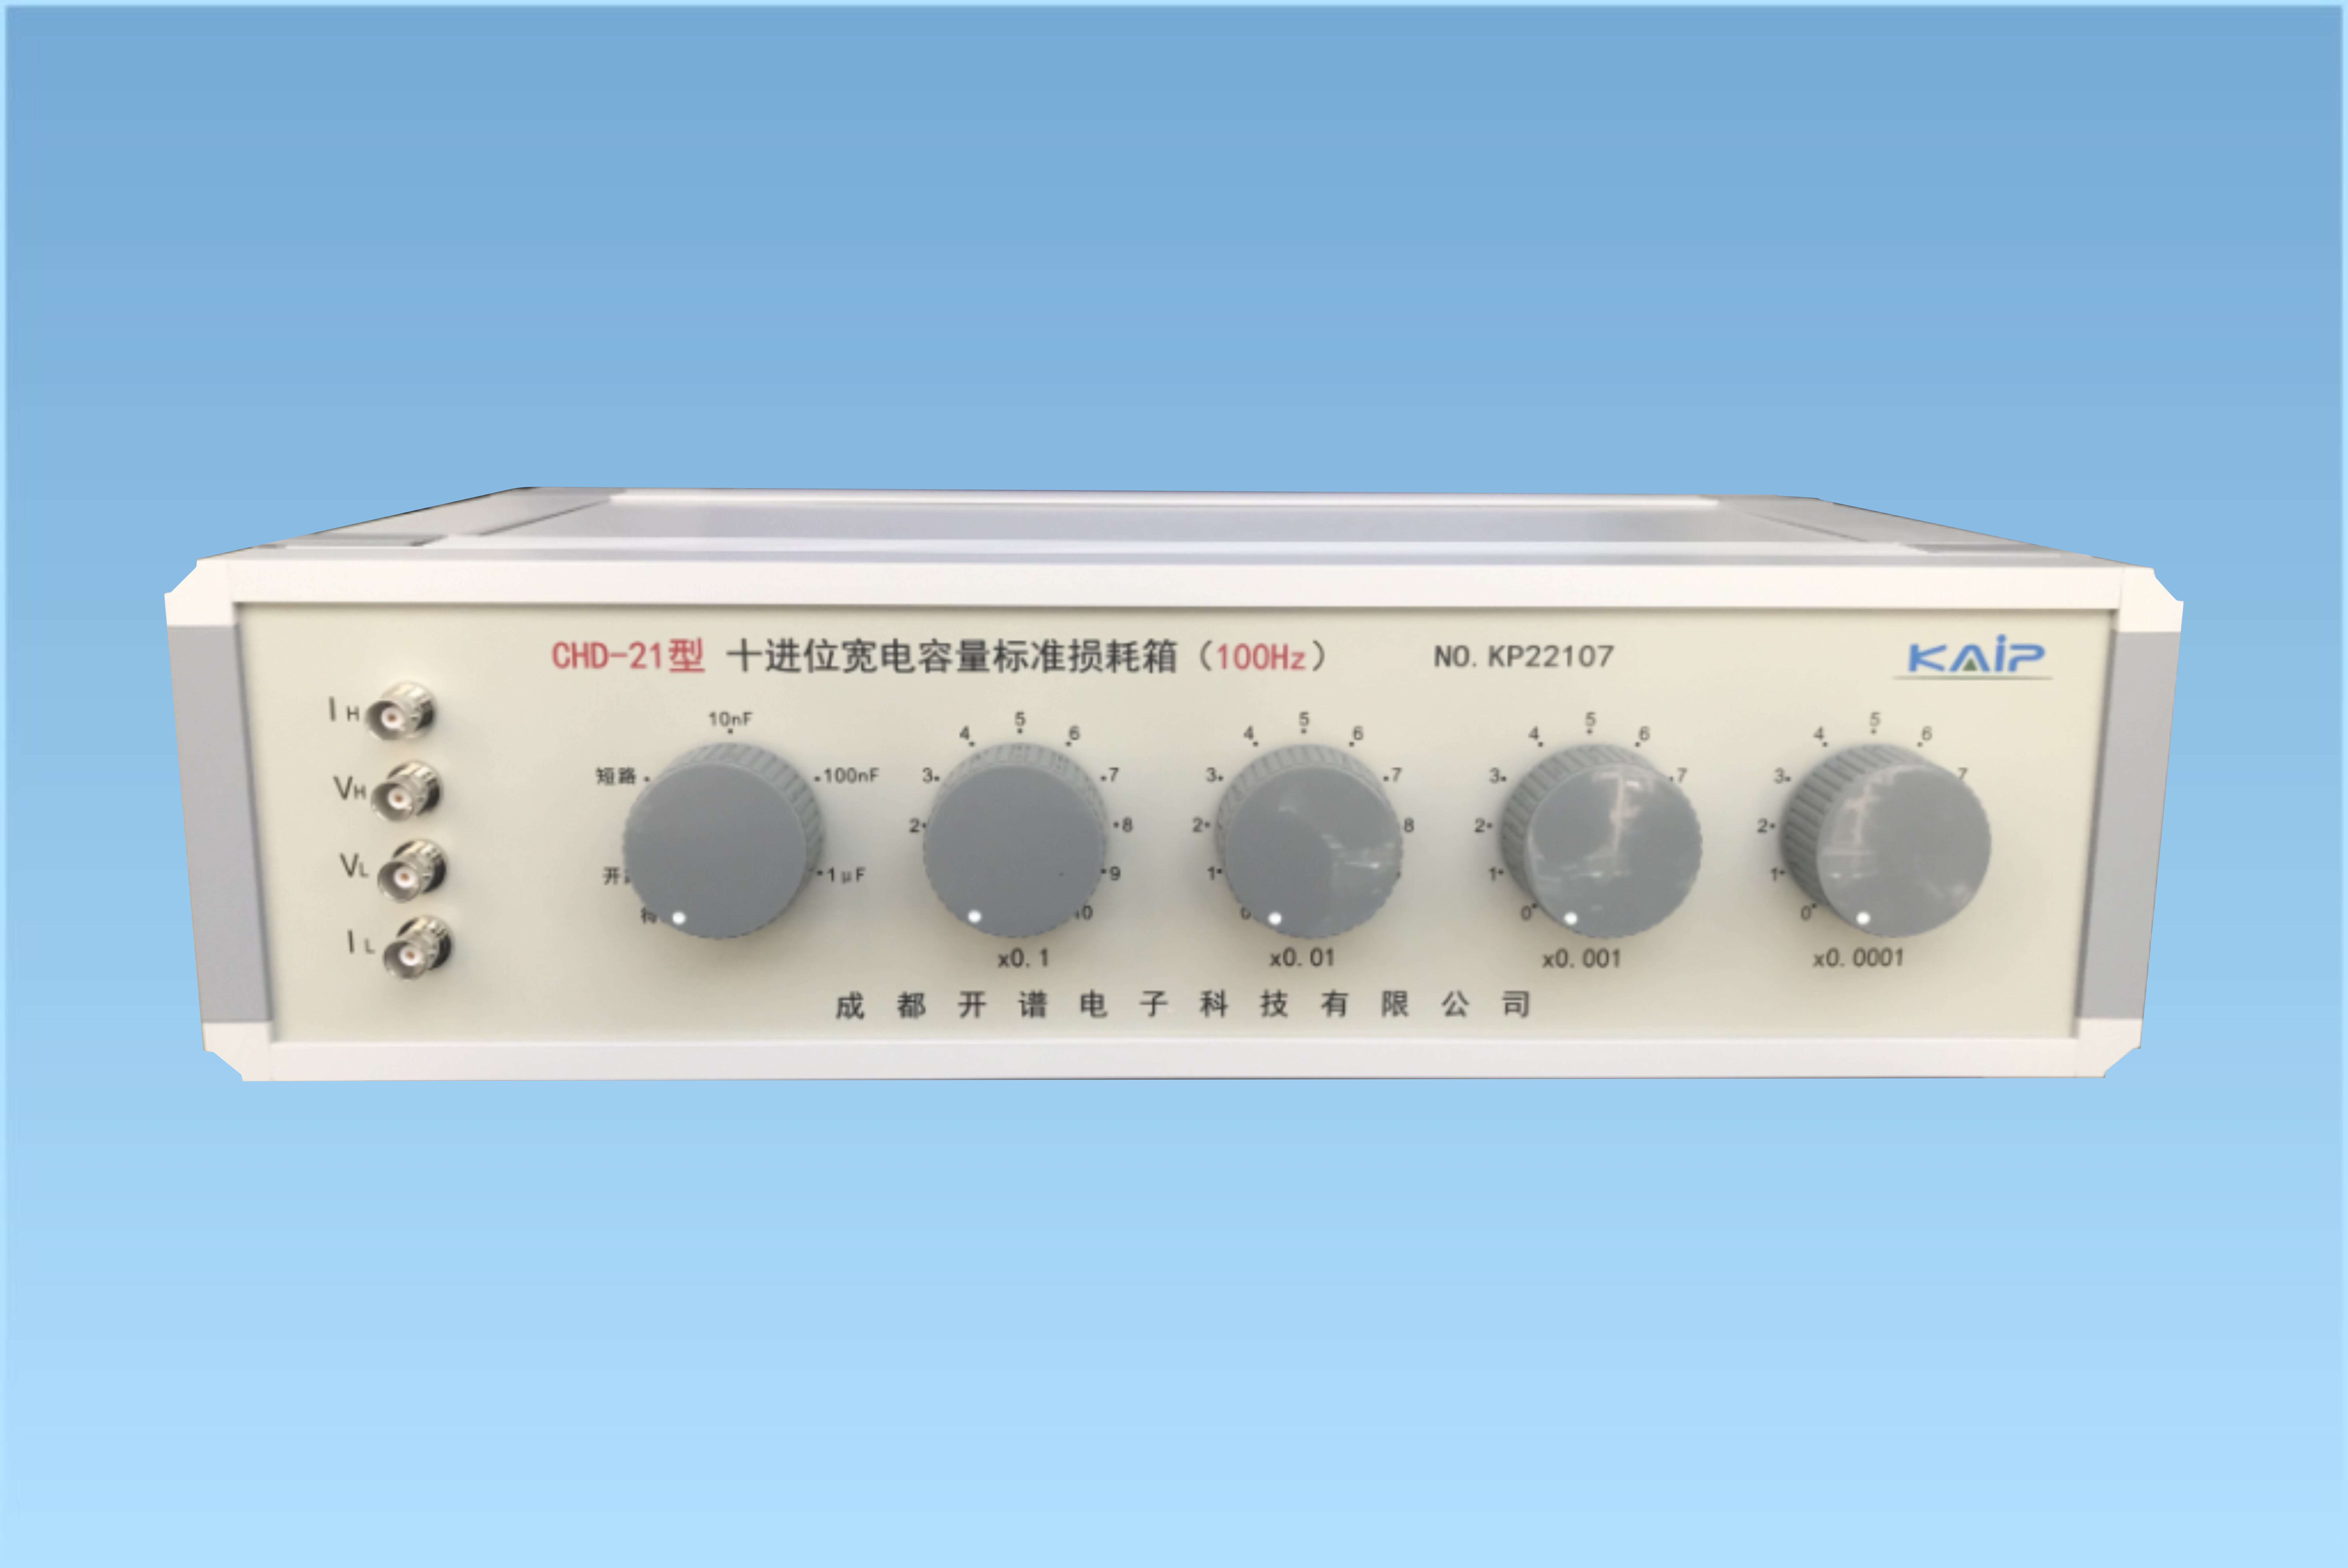 CHD-21型十进位宽电容量标准损耗箱(100Hz)